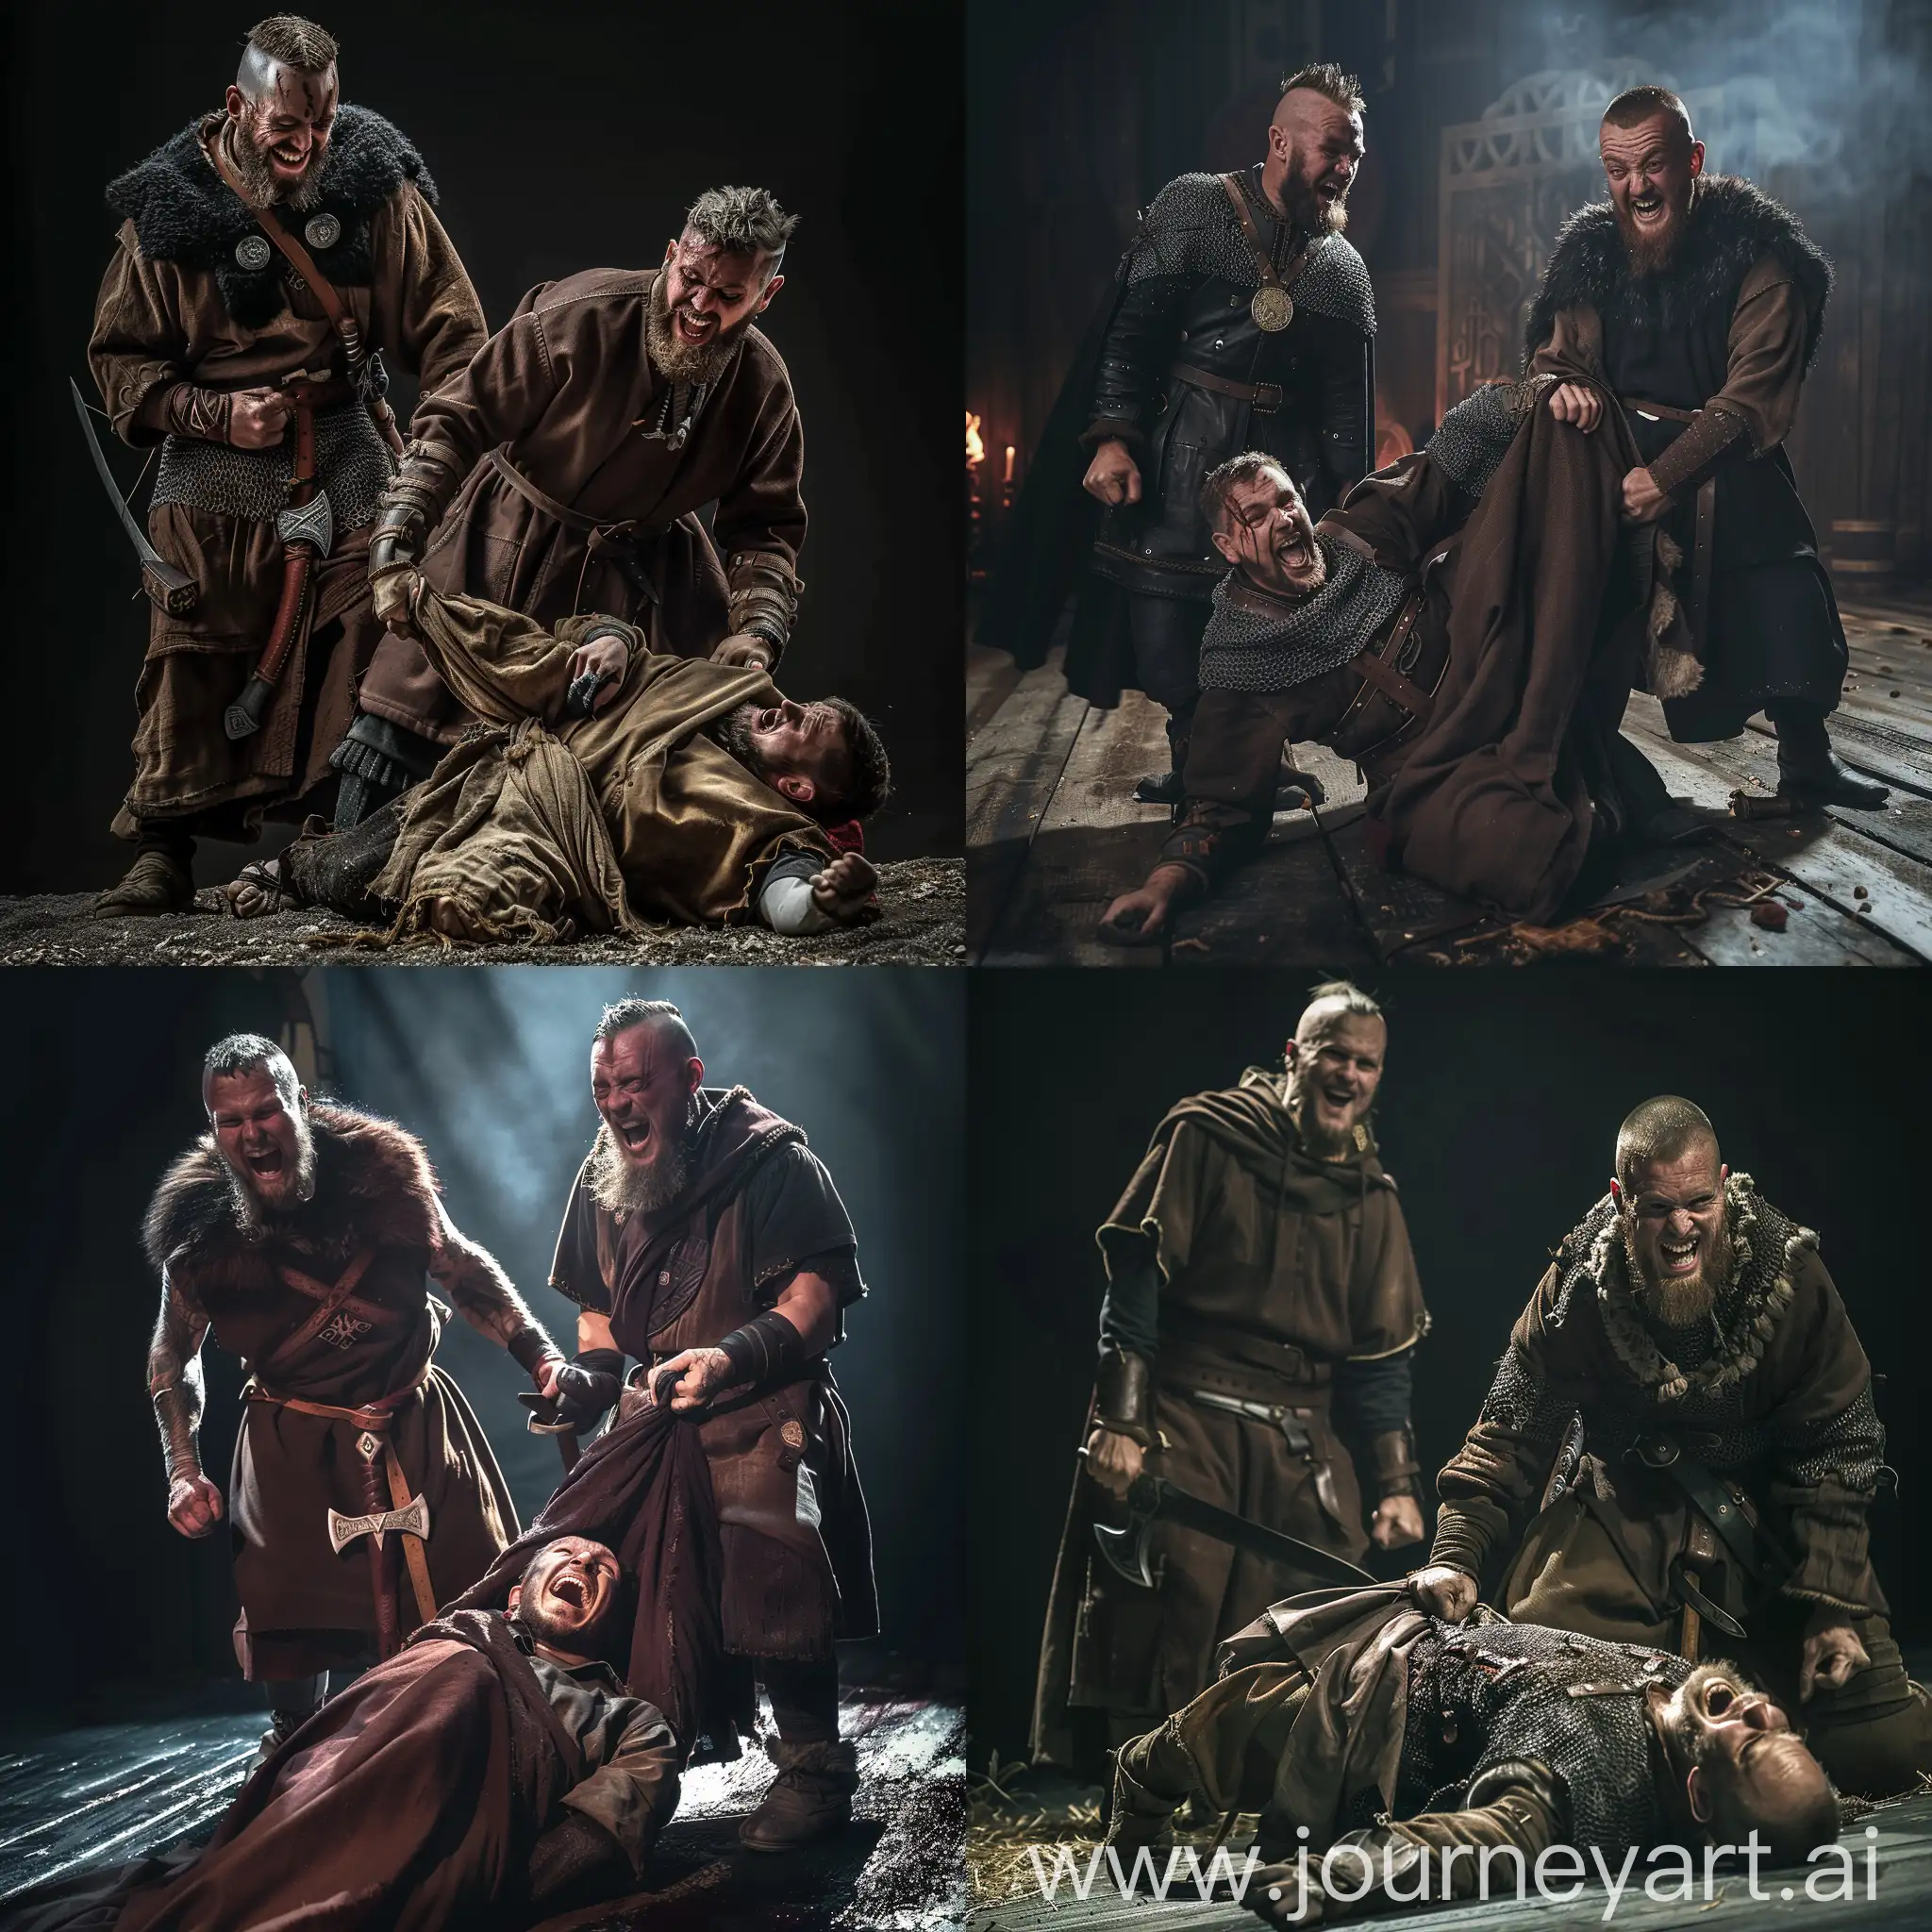 Viking-Warrior-Dragging-English-Monk-Brutal-Confrontation-in-Cinematic-Lighting